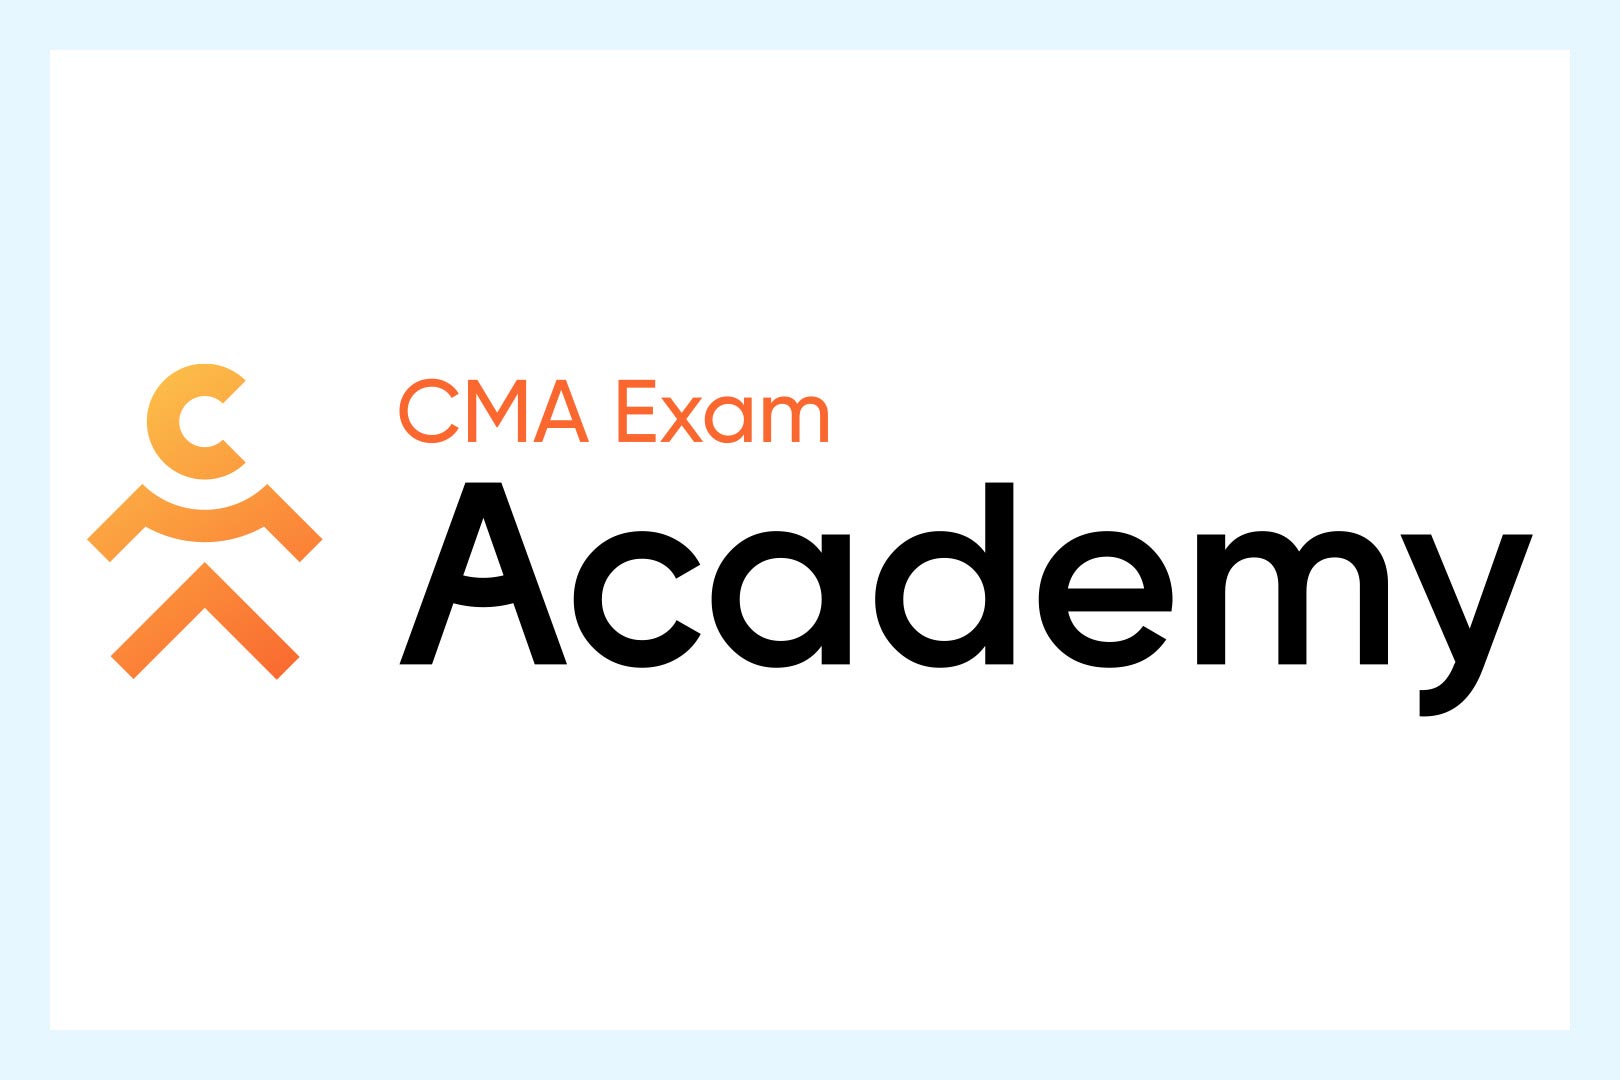 CMA Exam Academy